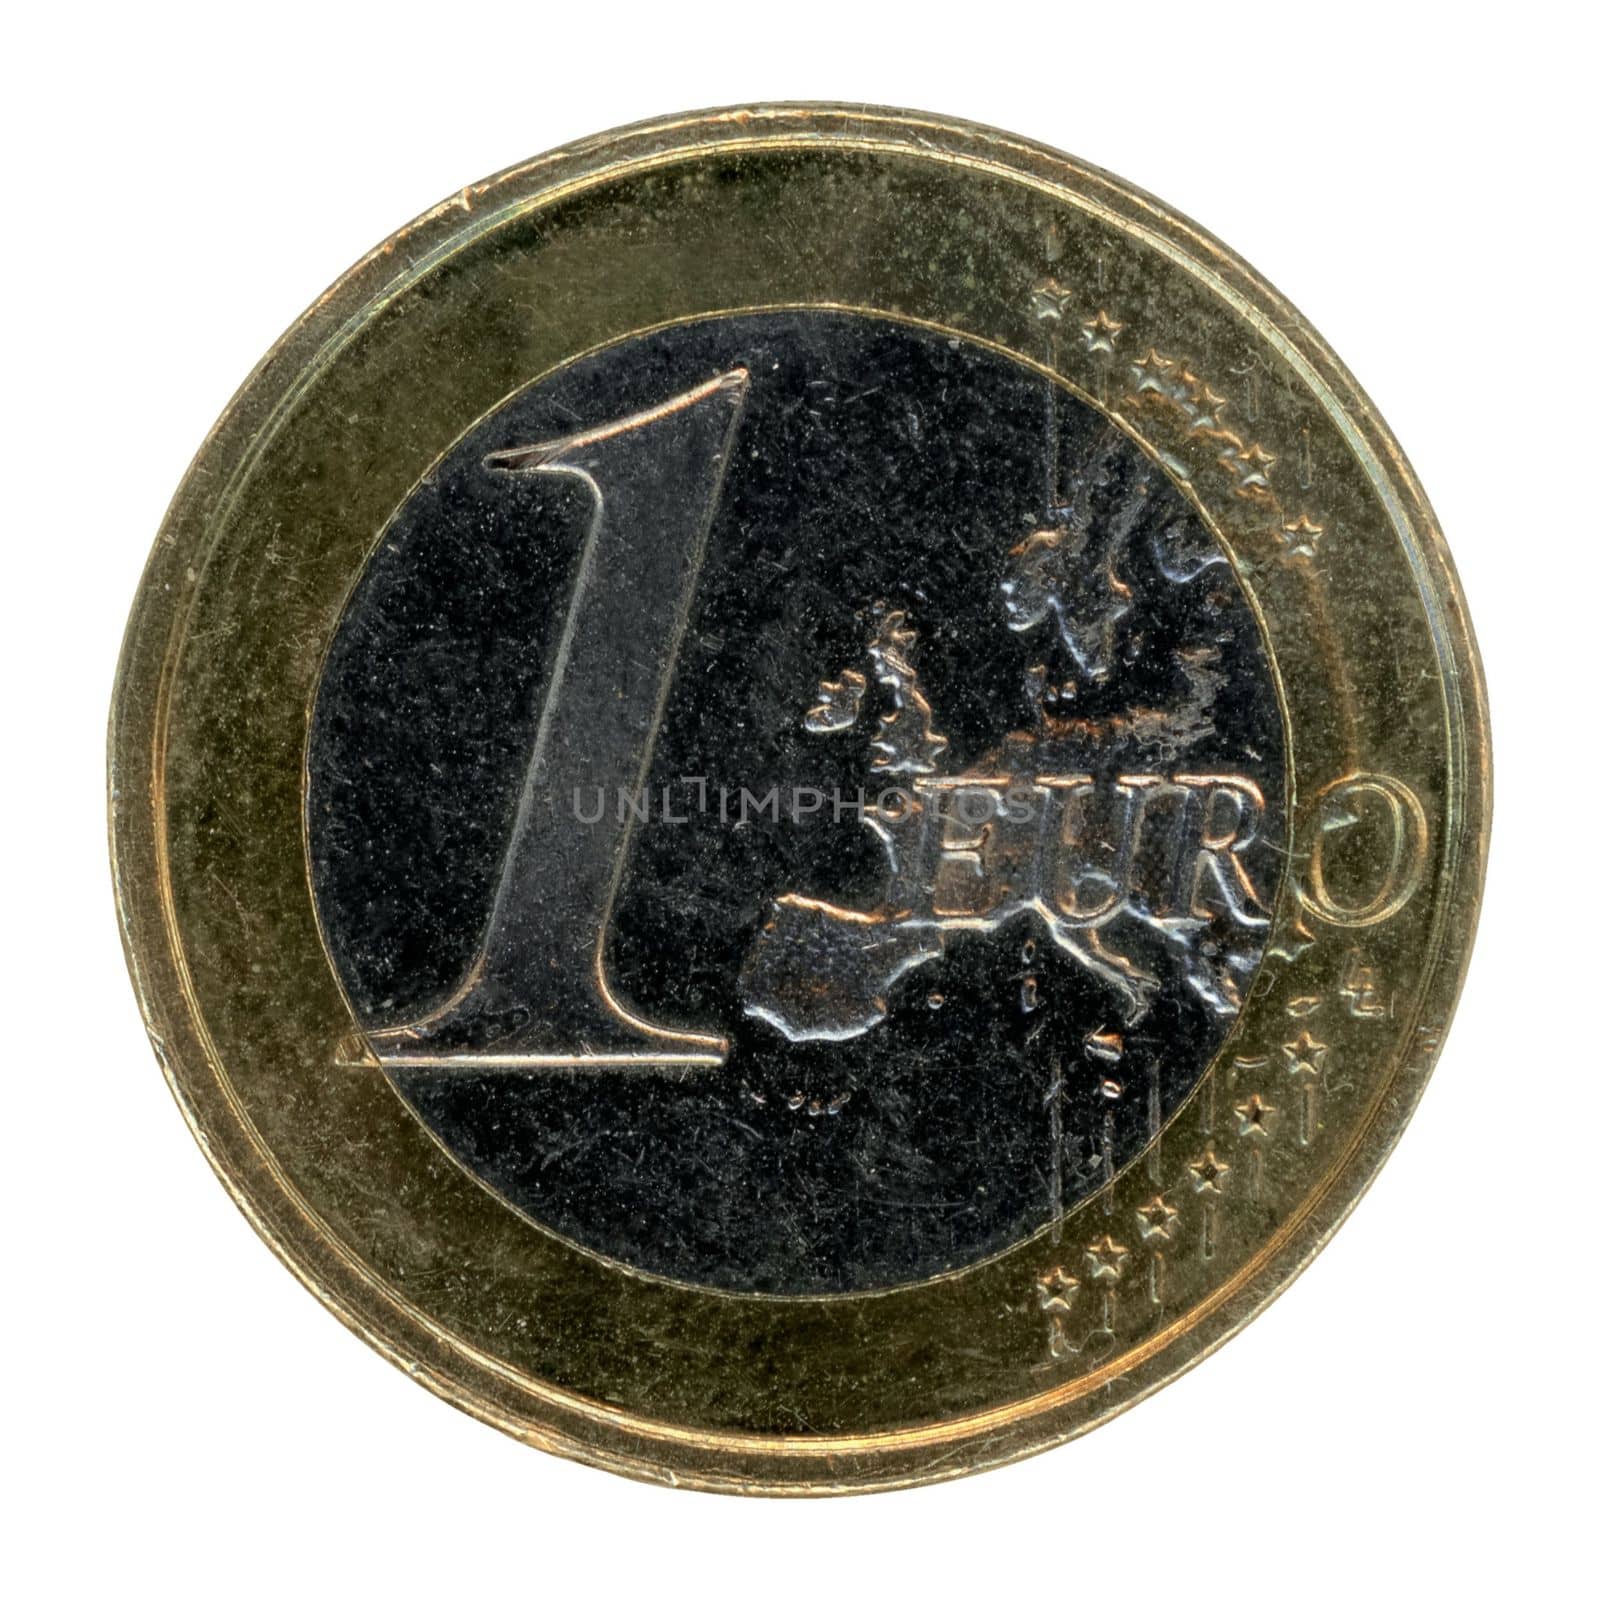 1 euro coin, European Union isolated over white by claudiodivizia